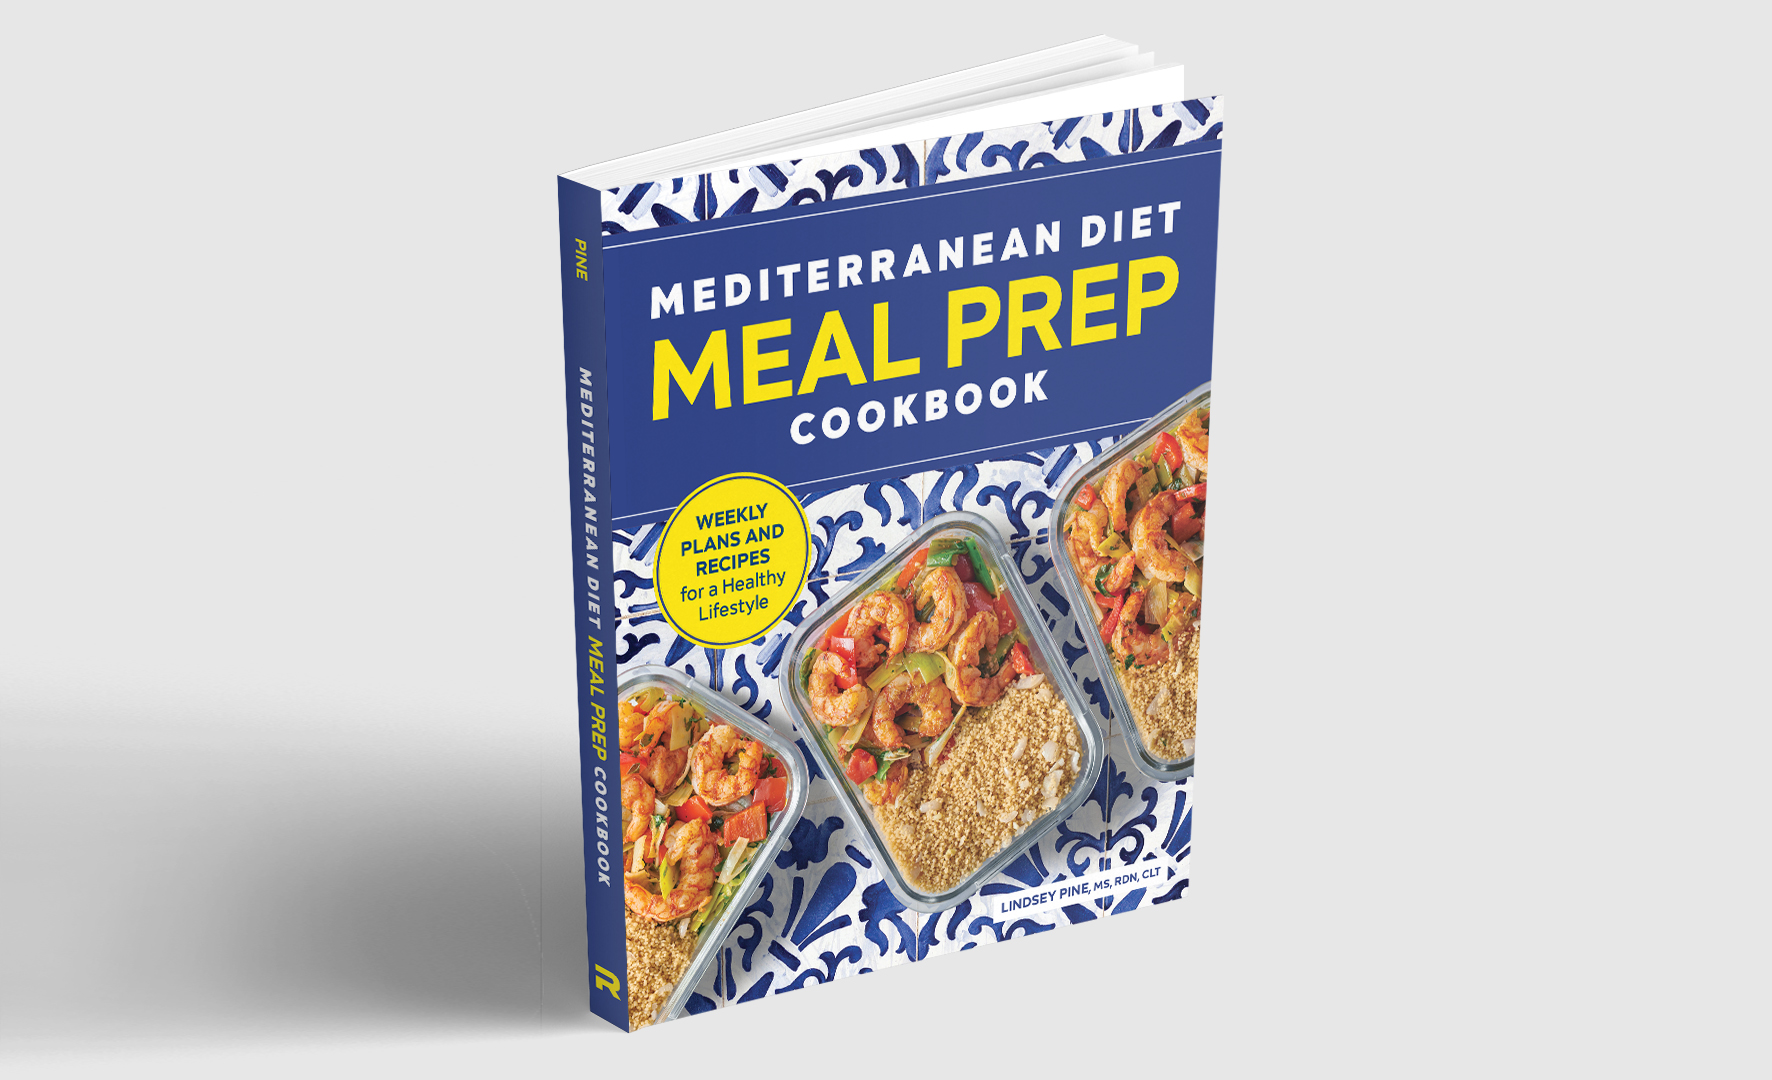 Mediterranean Diet Meal Prep Cookbook